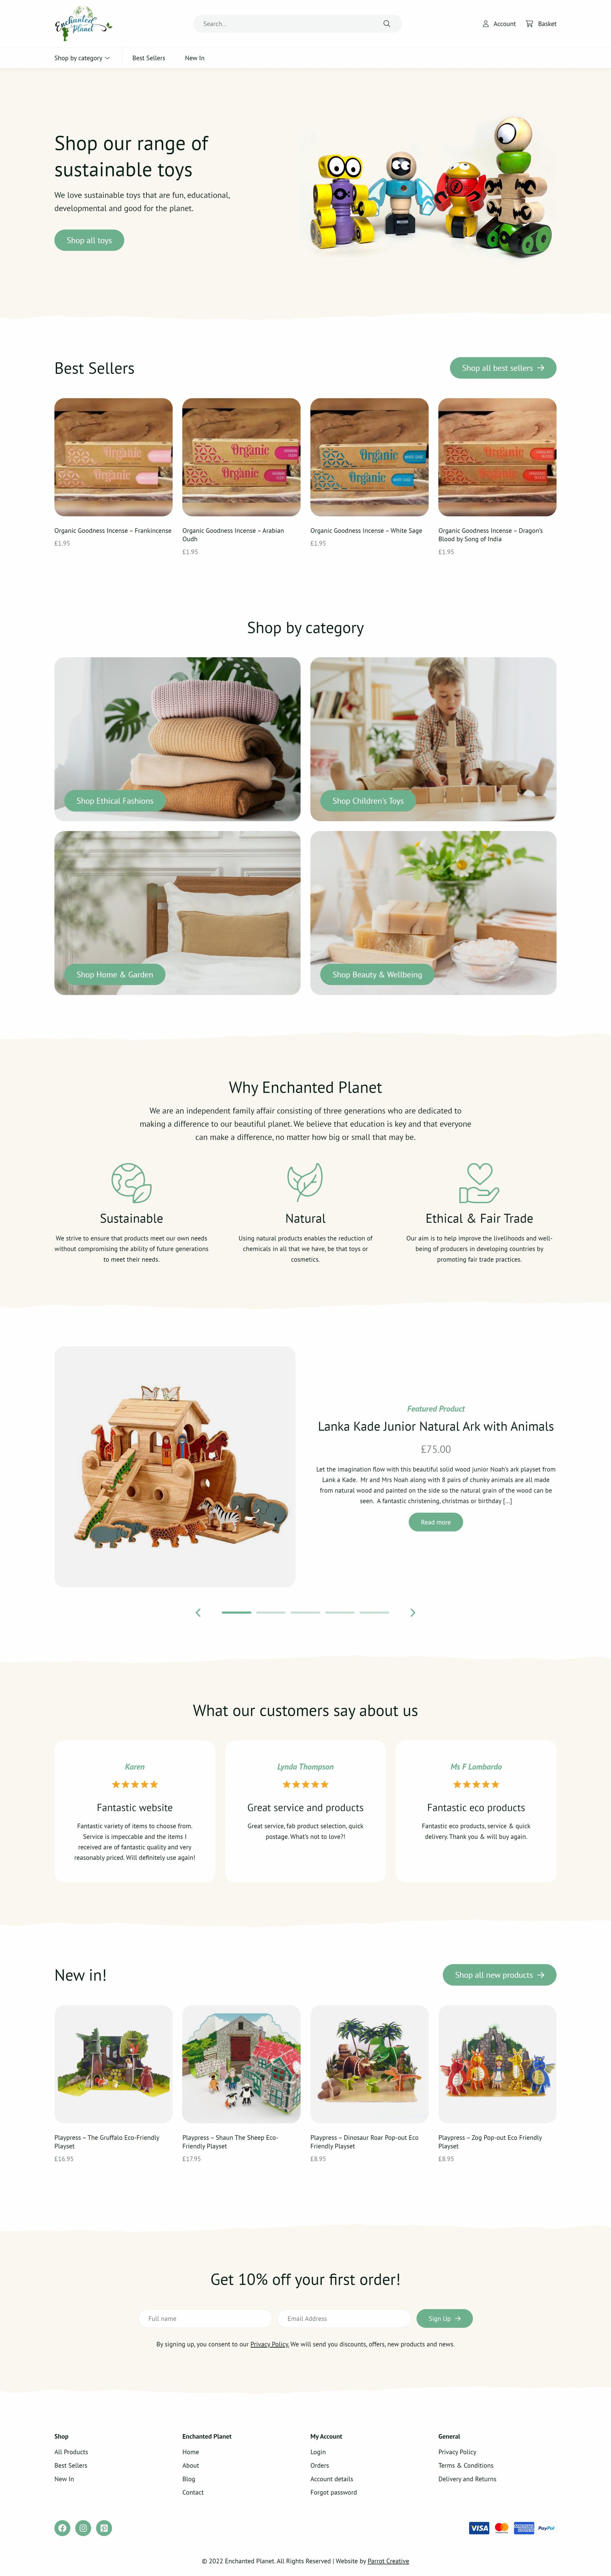 Enchanted Planet website design homepage